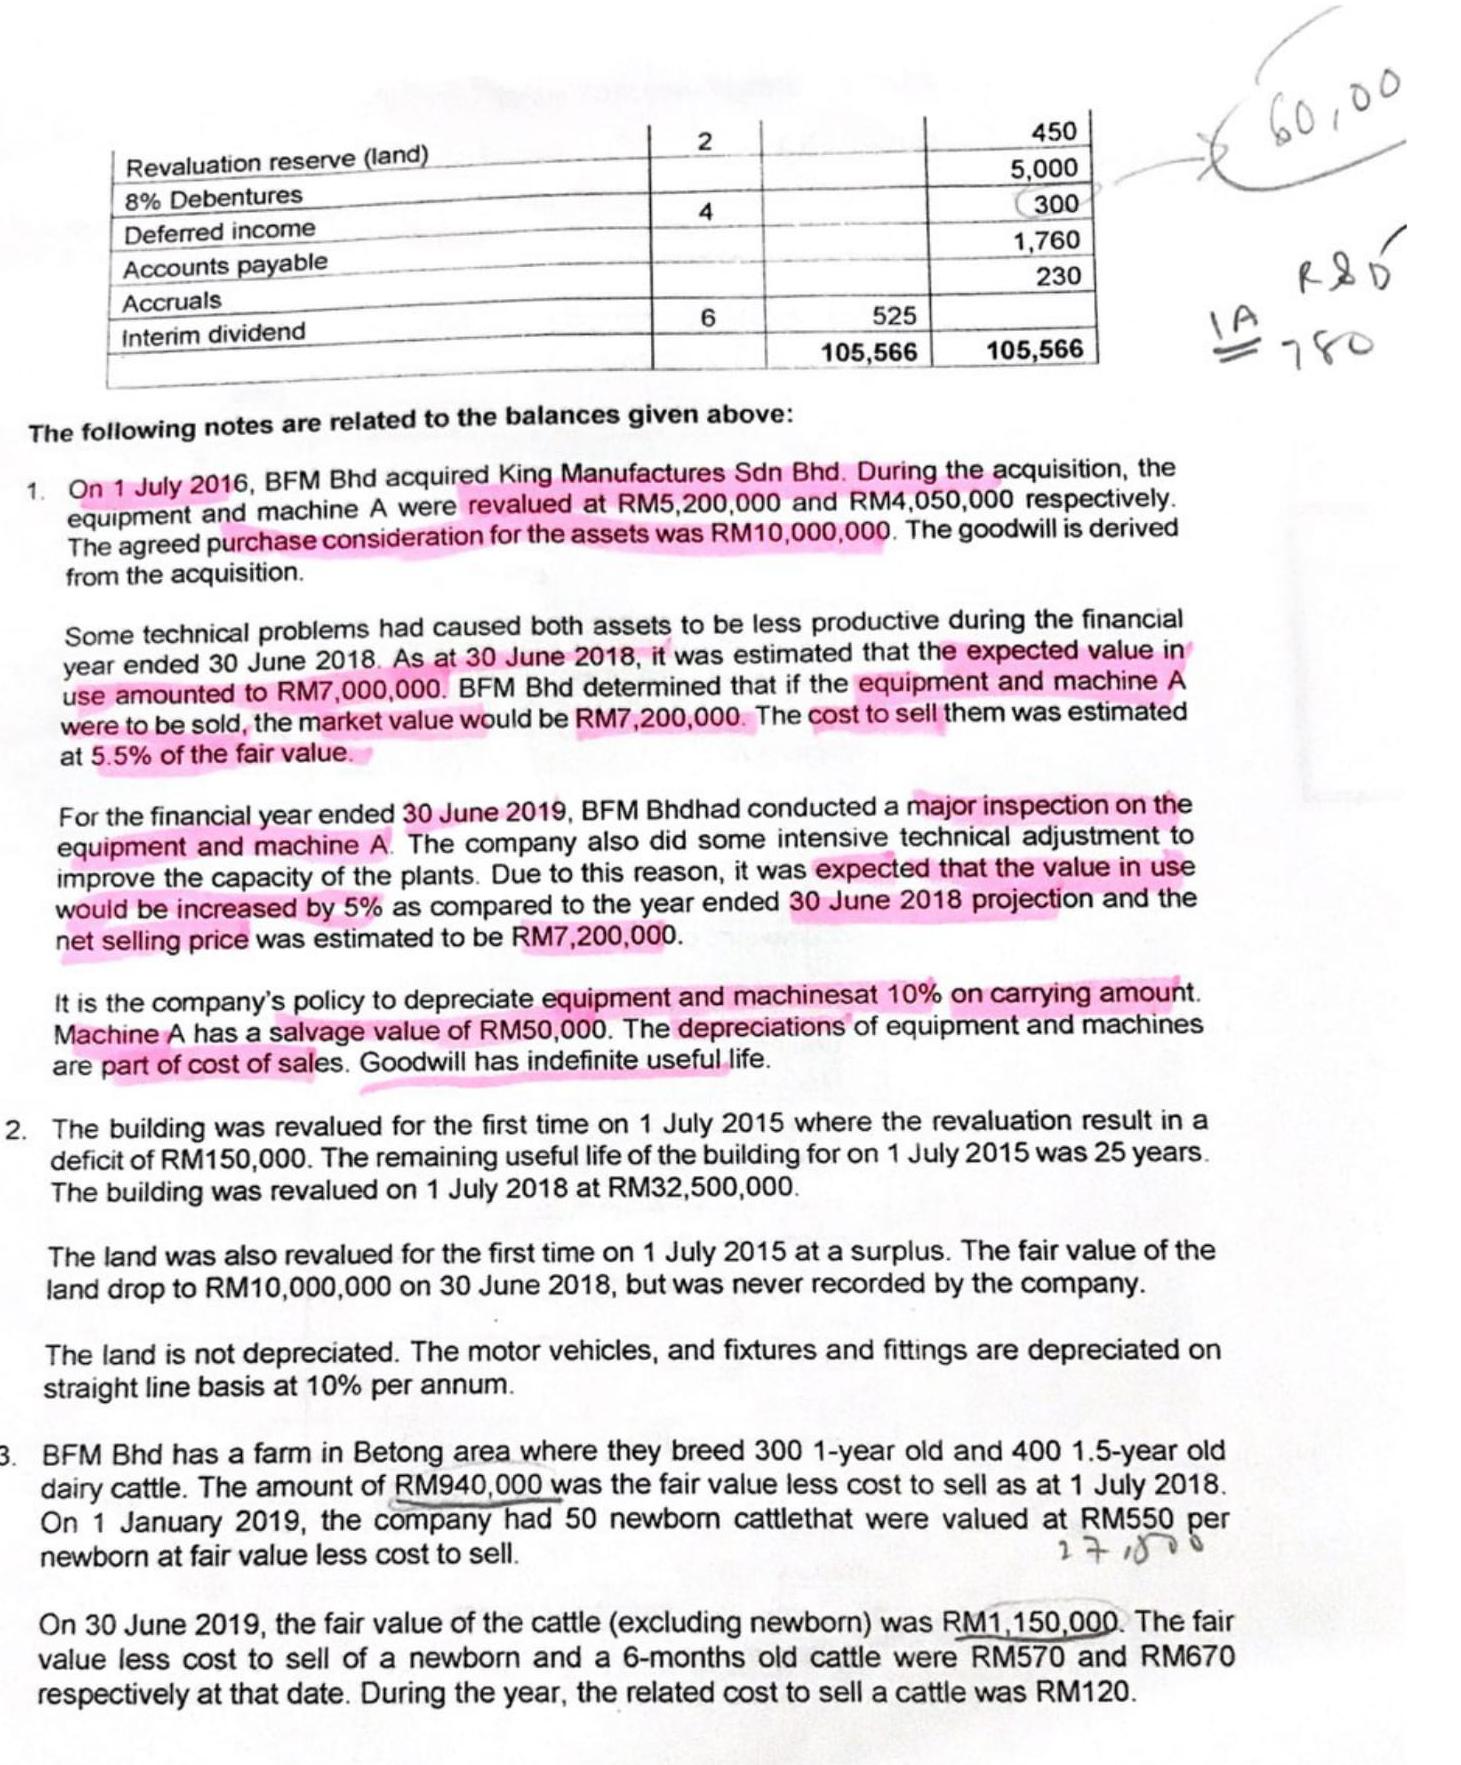 Revaluation reserve (land) 8% Debentures Deferred income Accounts payable Accruals interim dividend 2 4 6 525